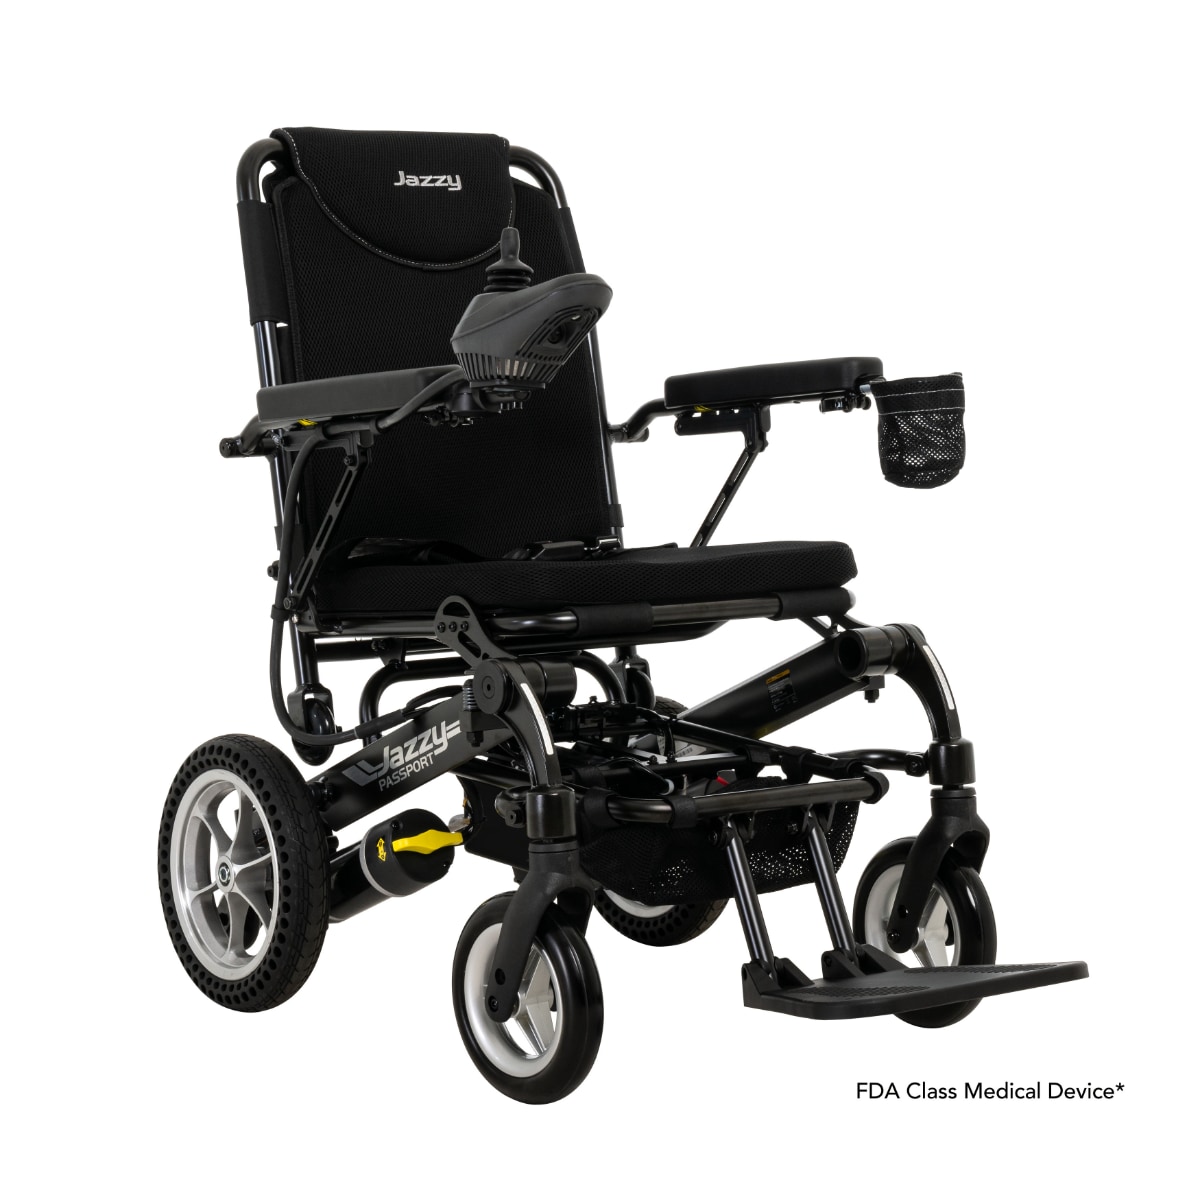 Sleek black mobility power chair